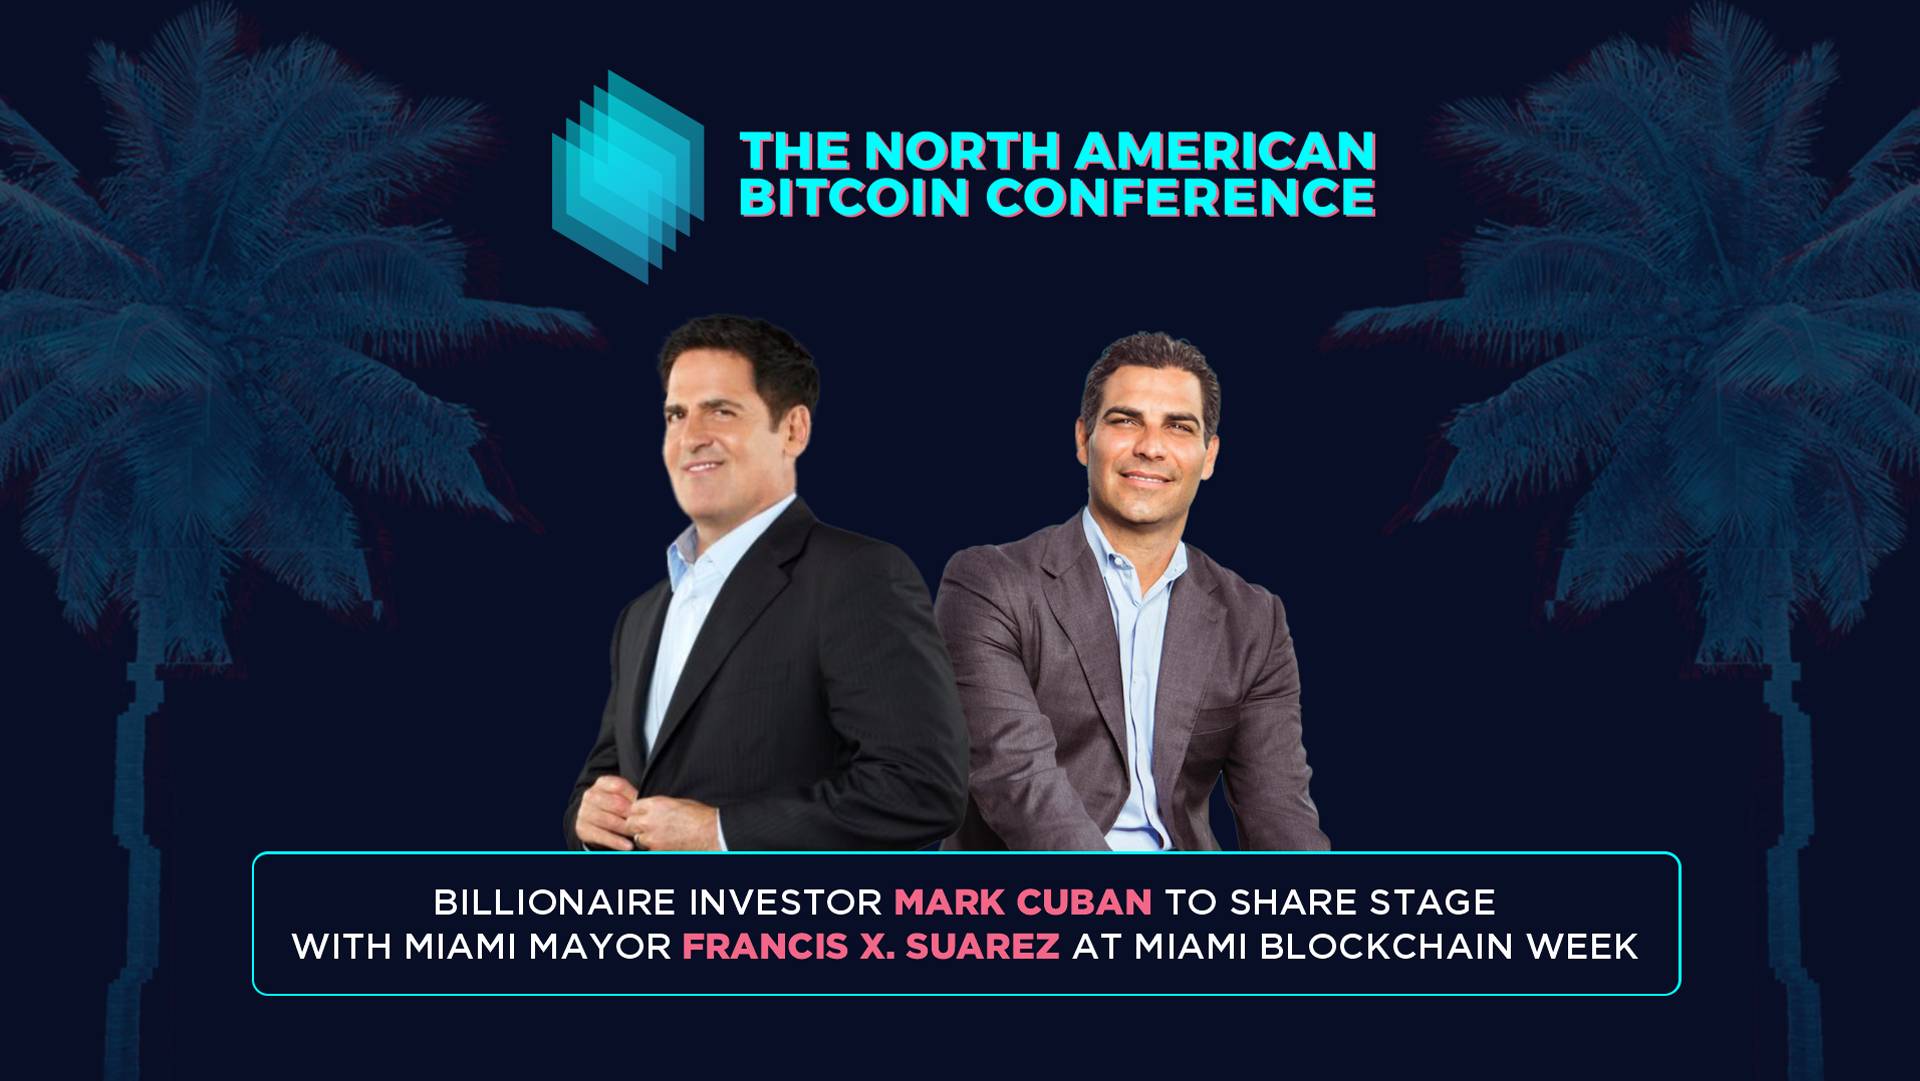 Billionaire Investor Mark Cuban to Share Stage at BTC Miami With Mayor Francis X. Suarez to Kick Off Blockchain Week